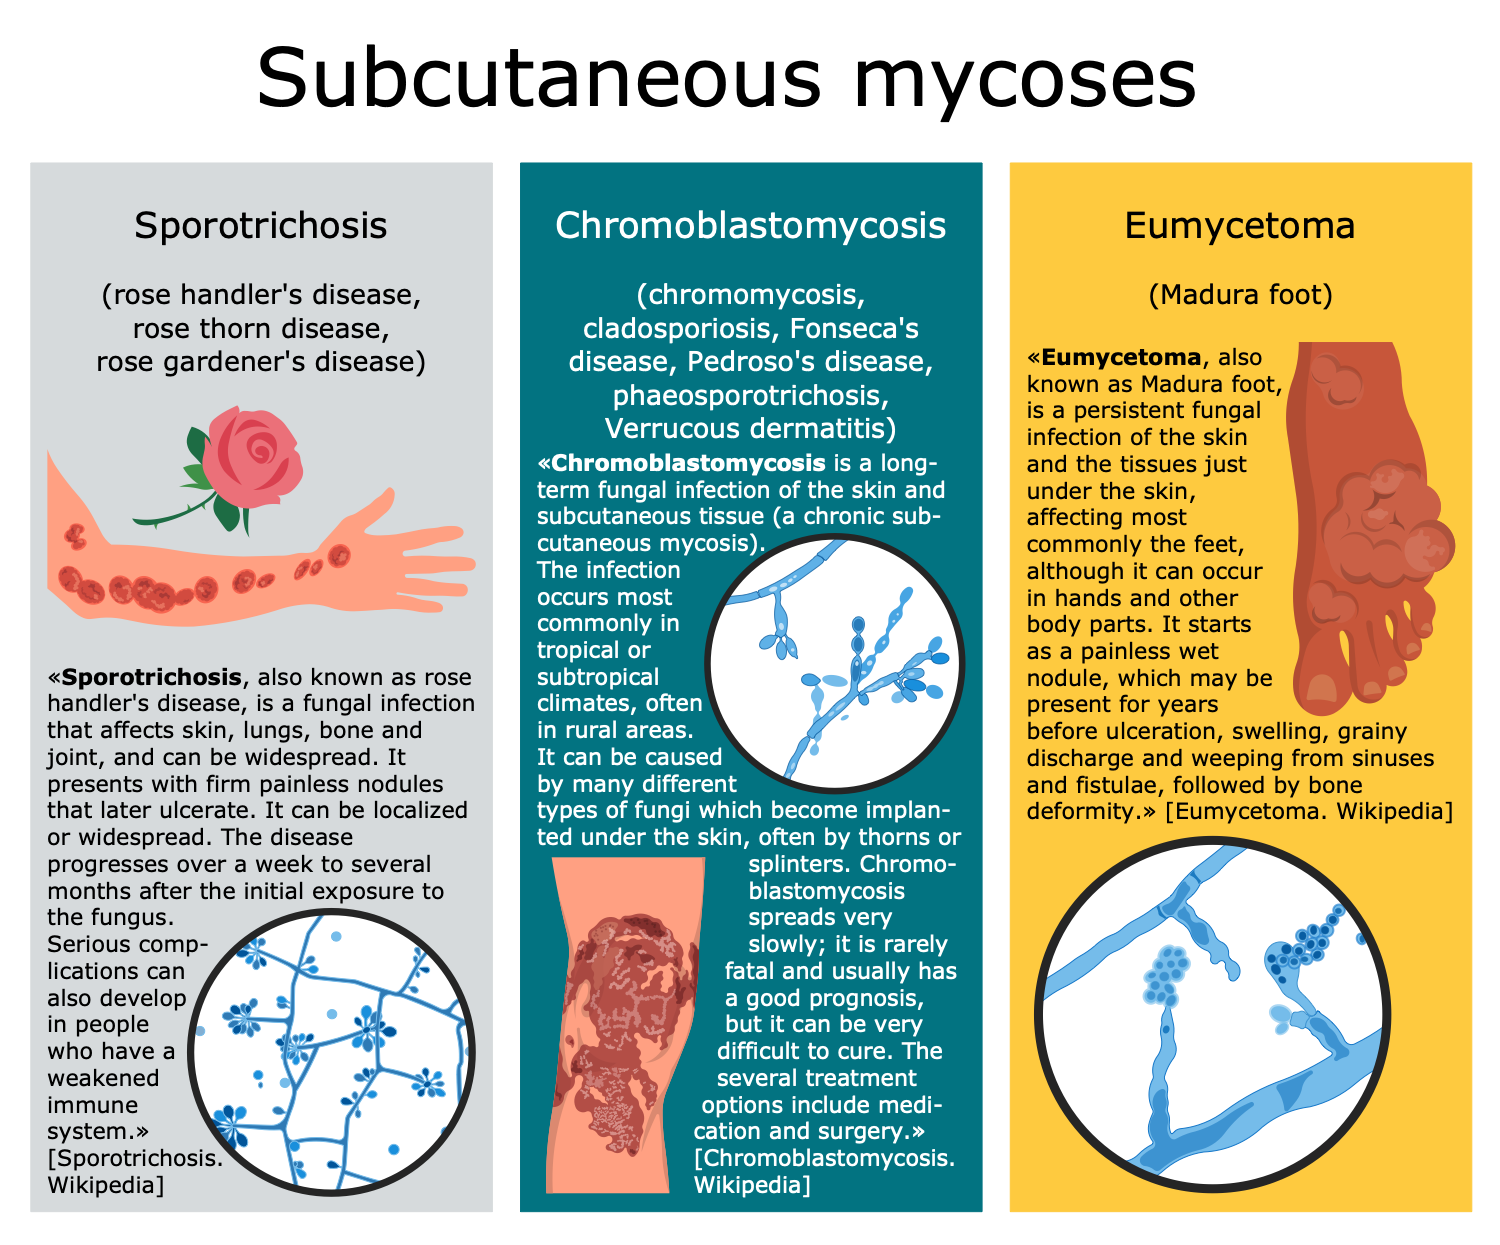 Subcutaneous Mycoses